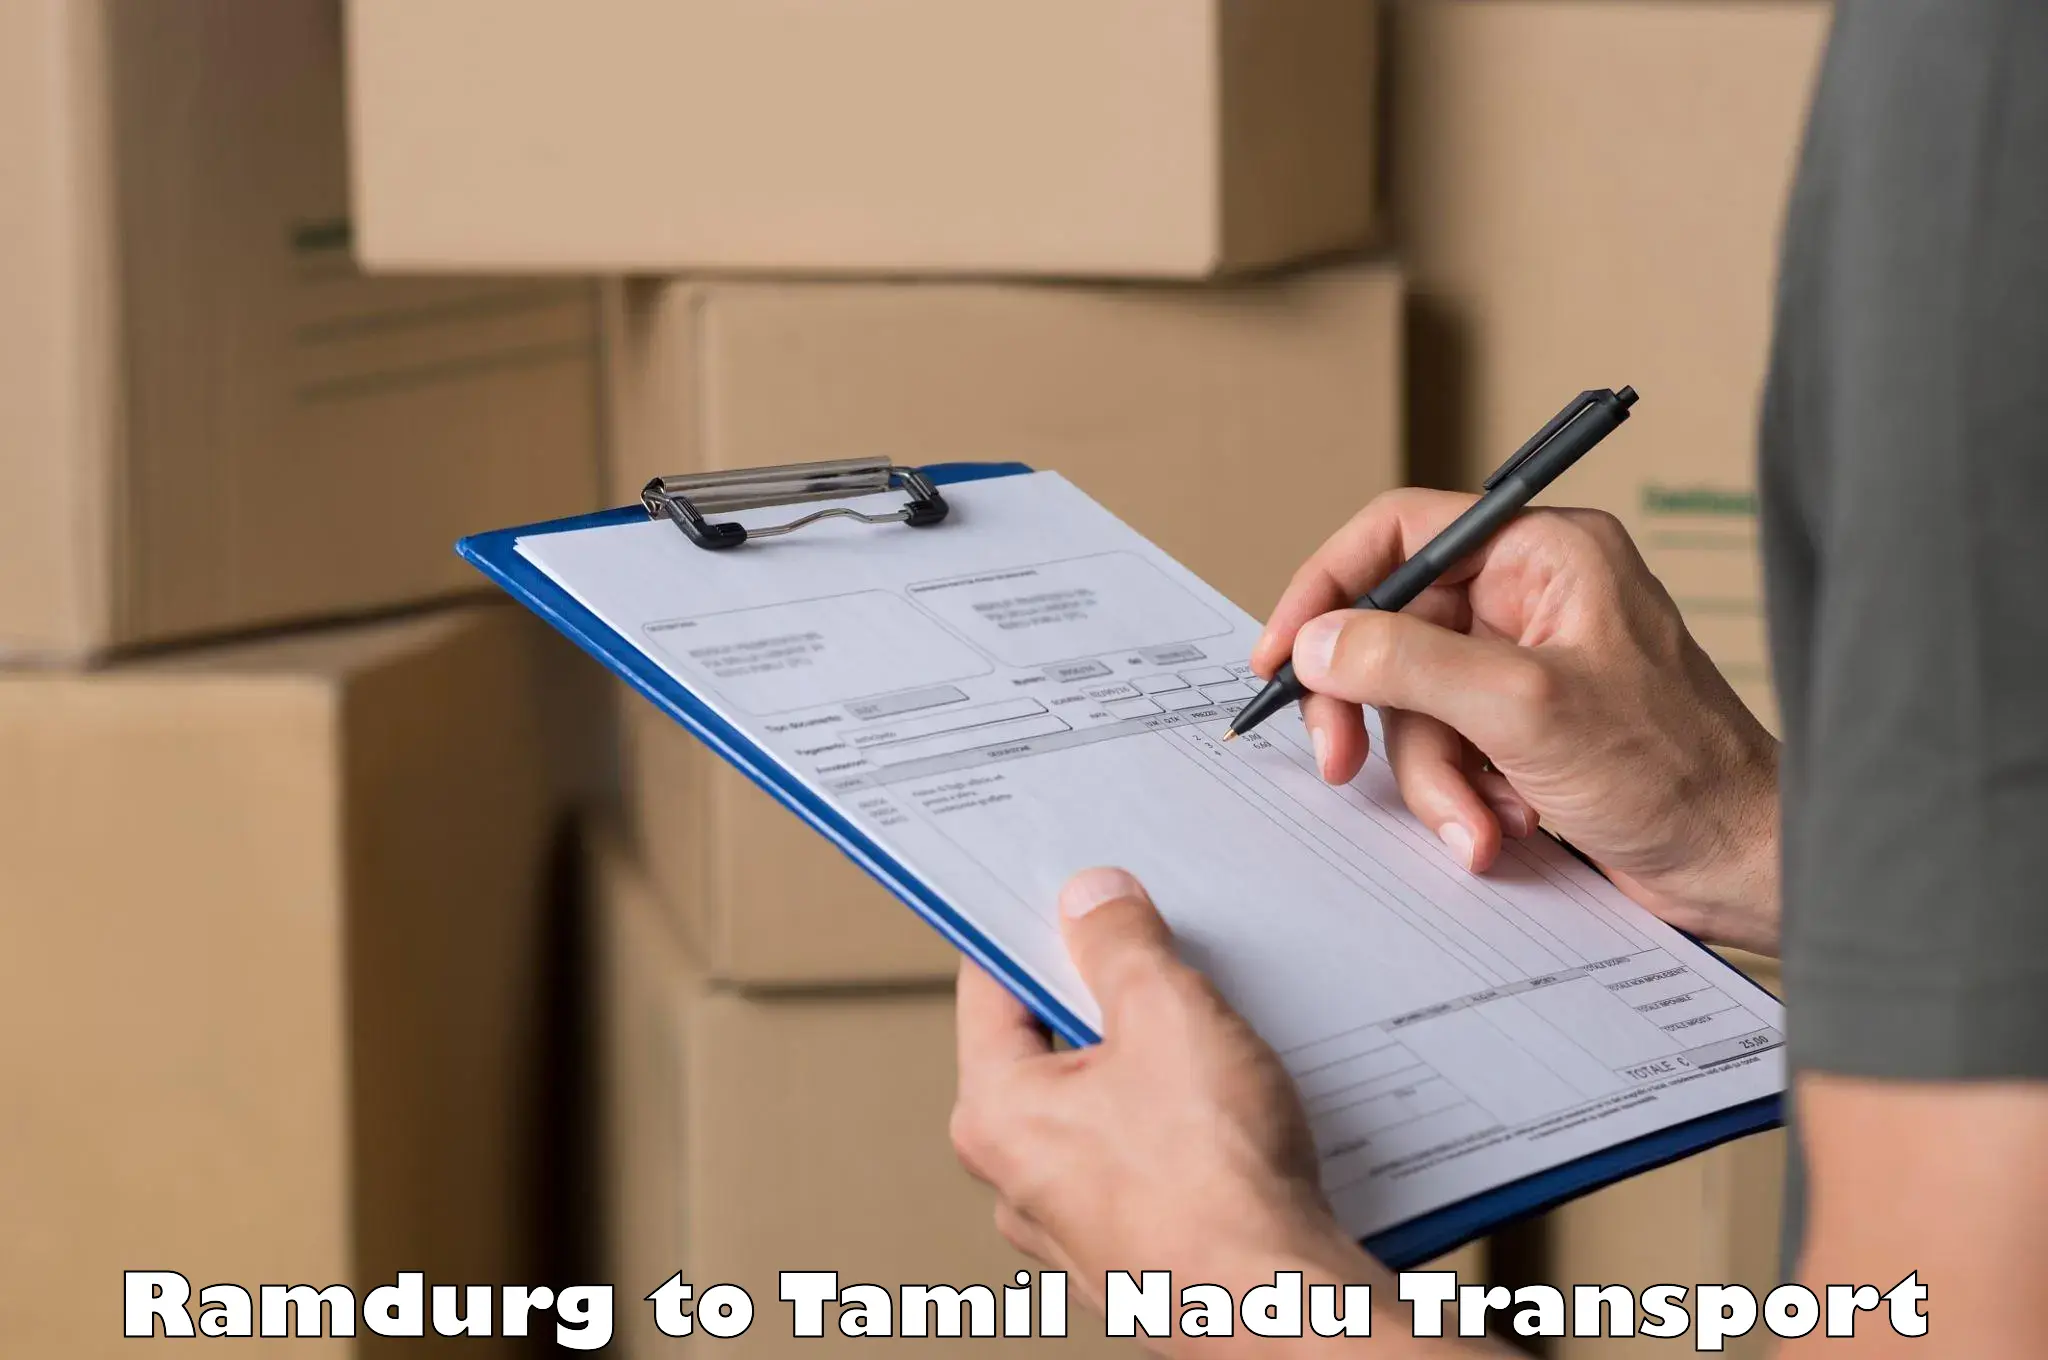 Delivery service Ramdurg to Tirukalukundram